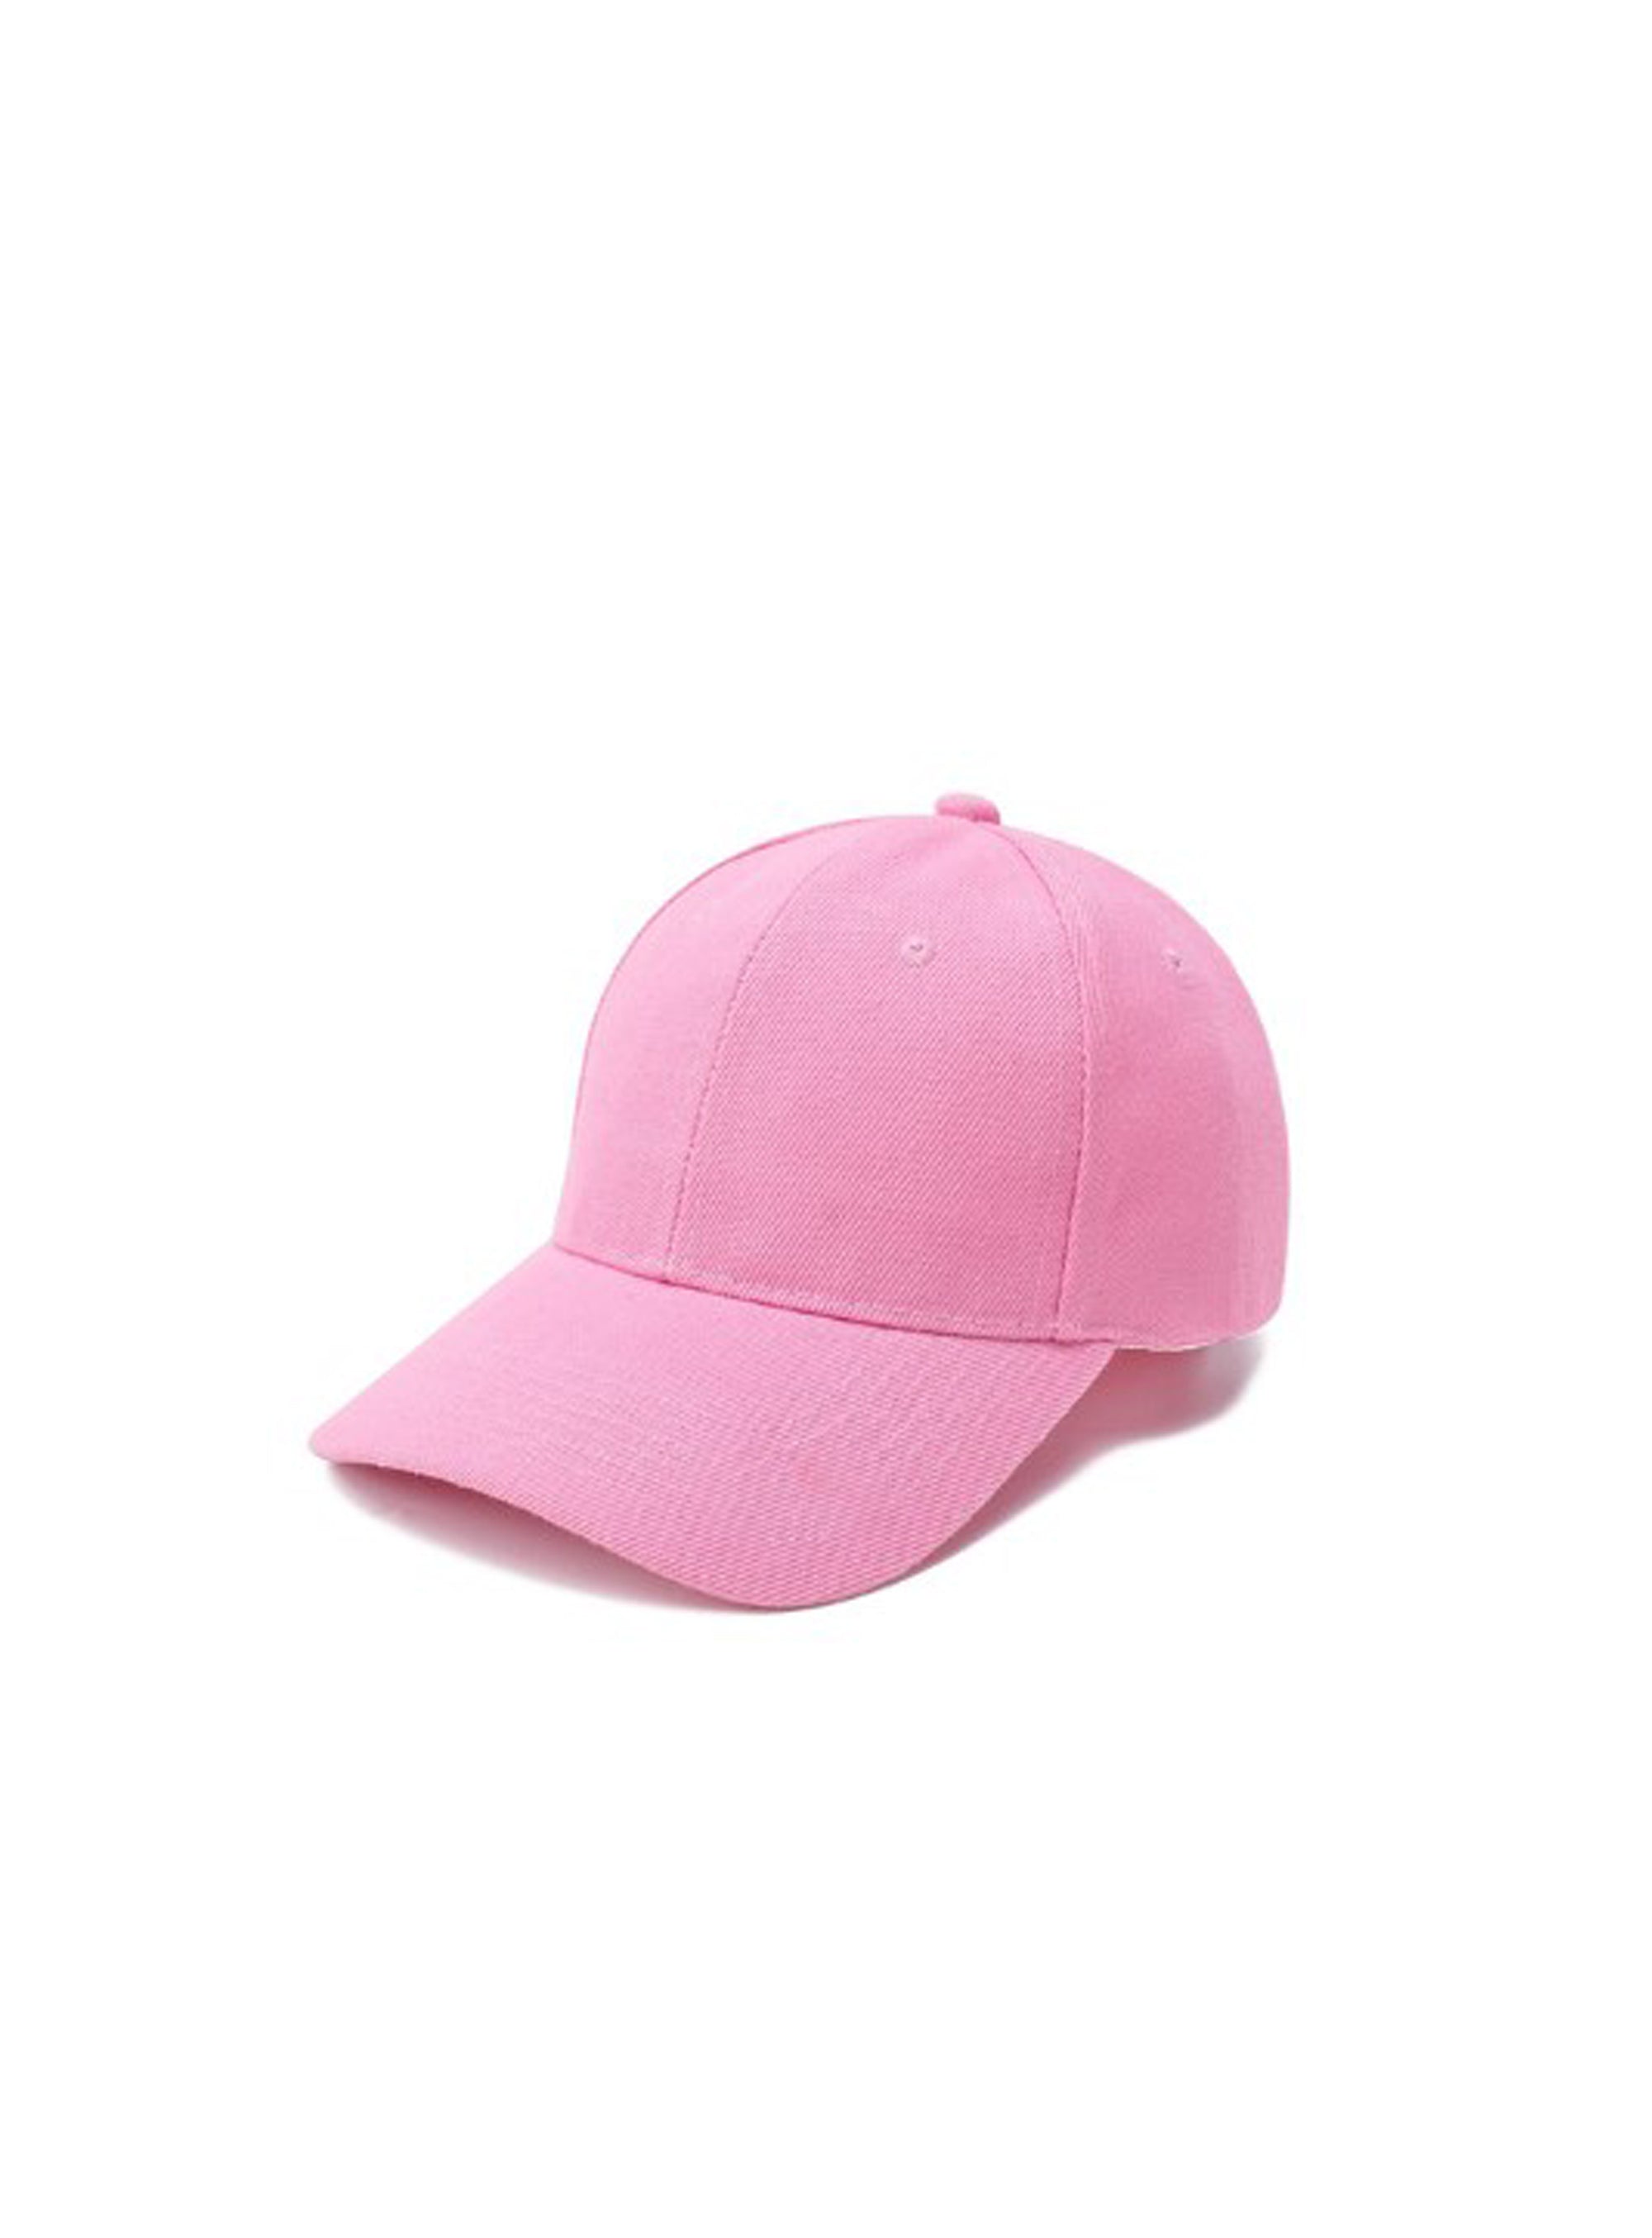 bubble gum pink cap with adjustable strap